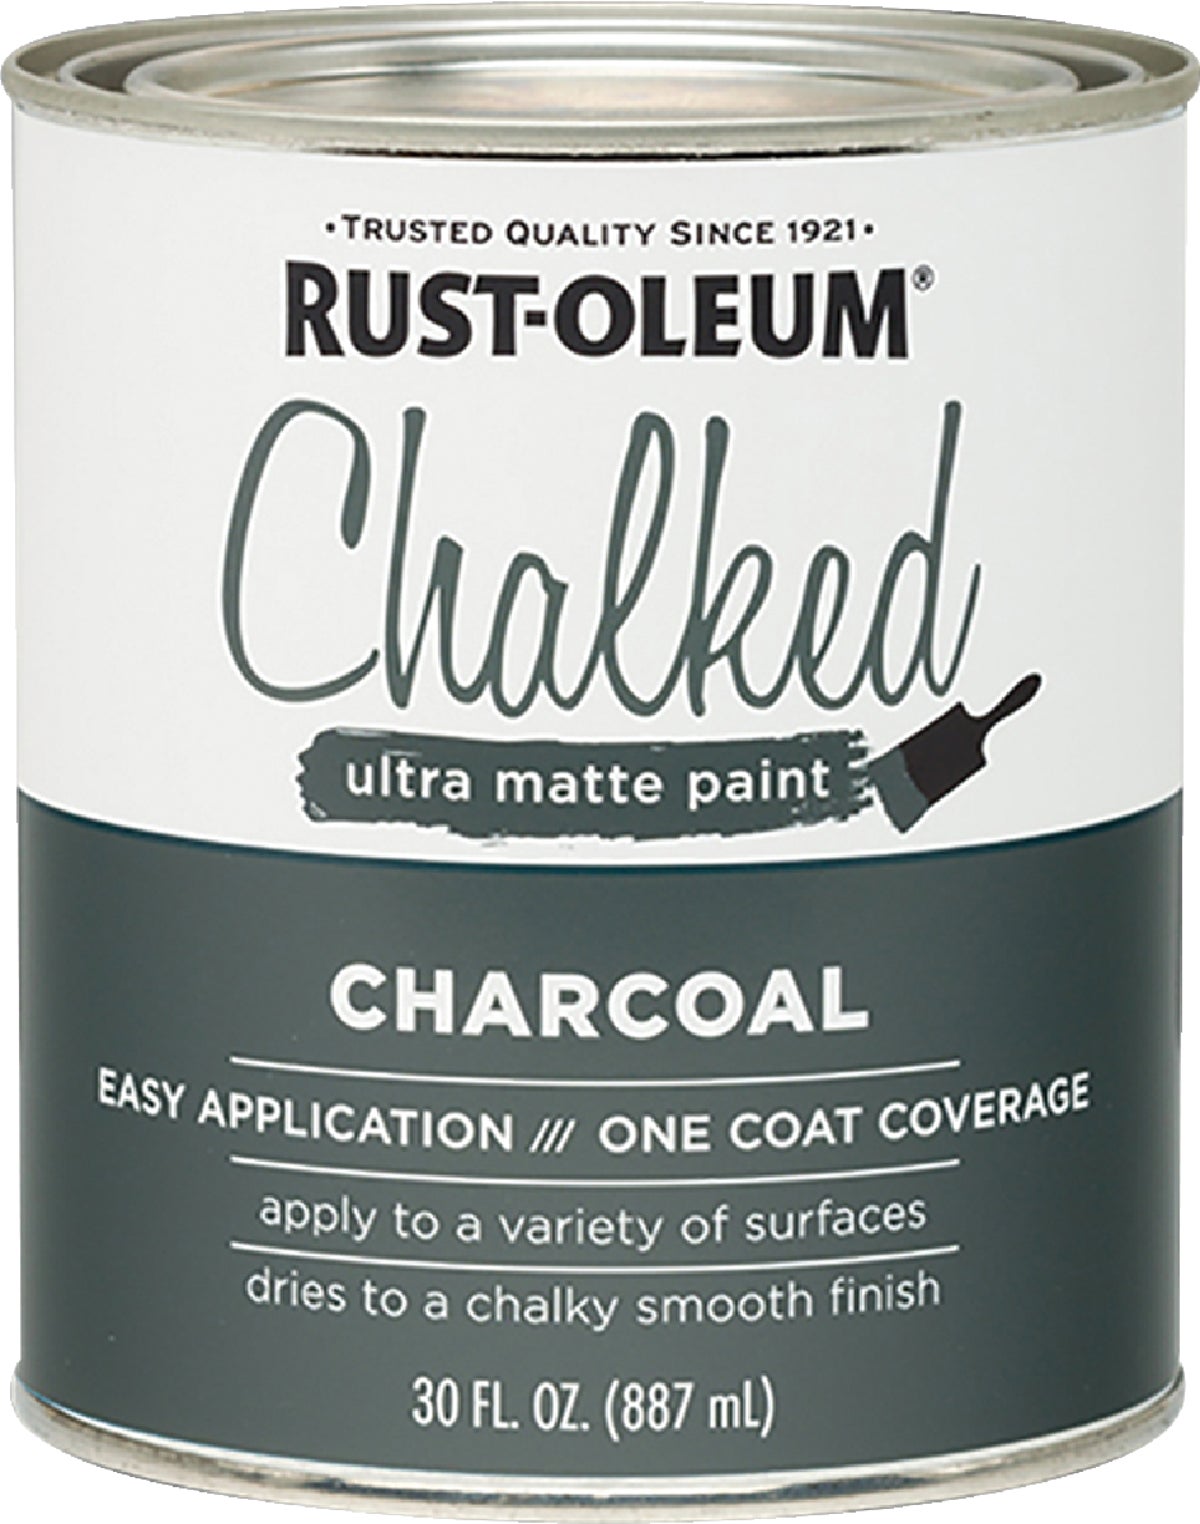 Rust-Oleum 329207-2pk Ultra Matte Interior Chalked Paint, 30 oz, Coastal Blue, 2 Pack